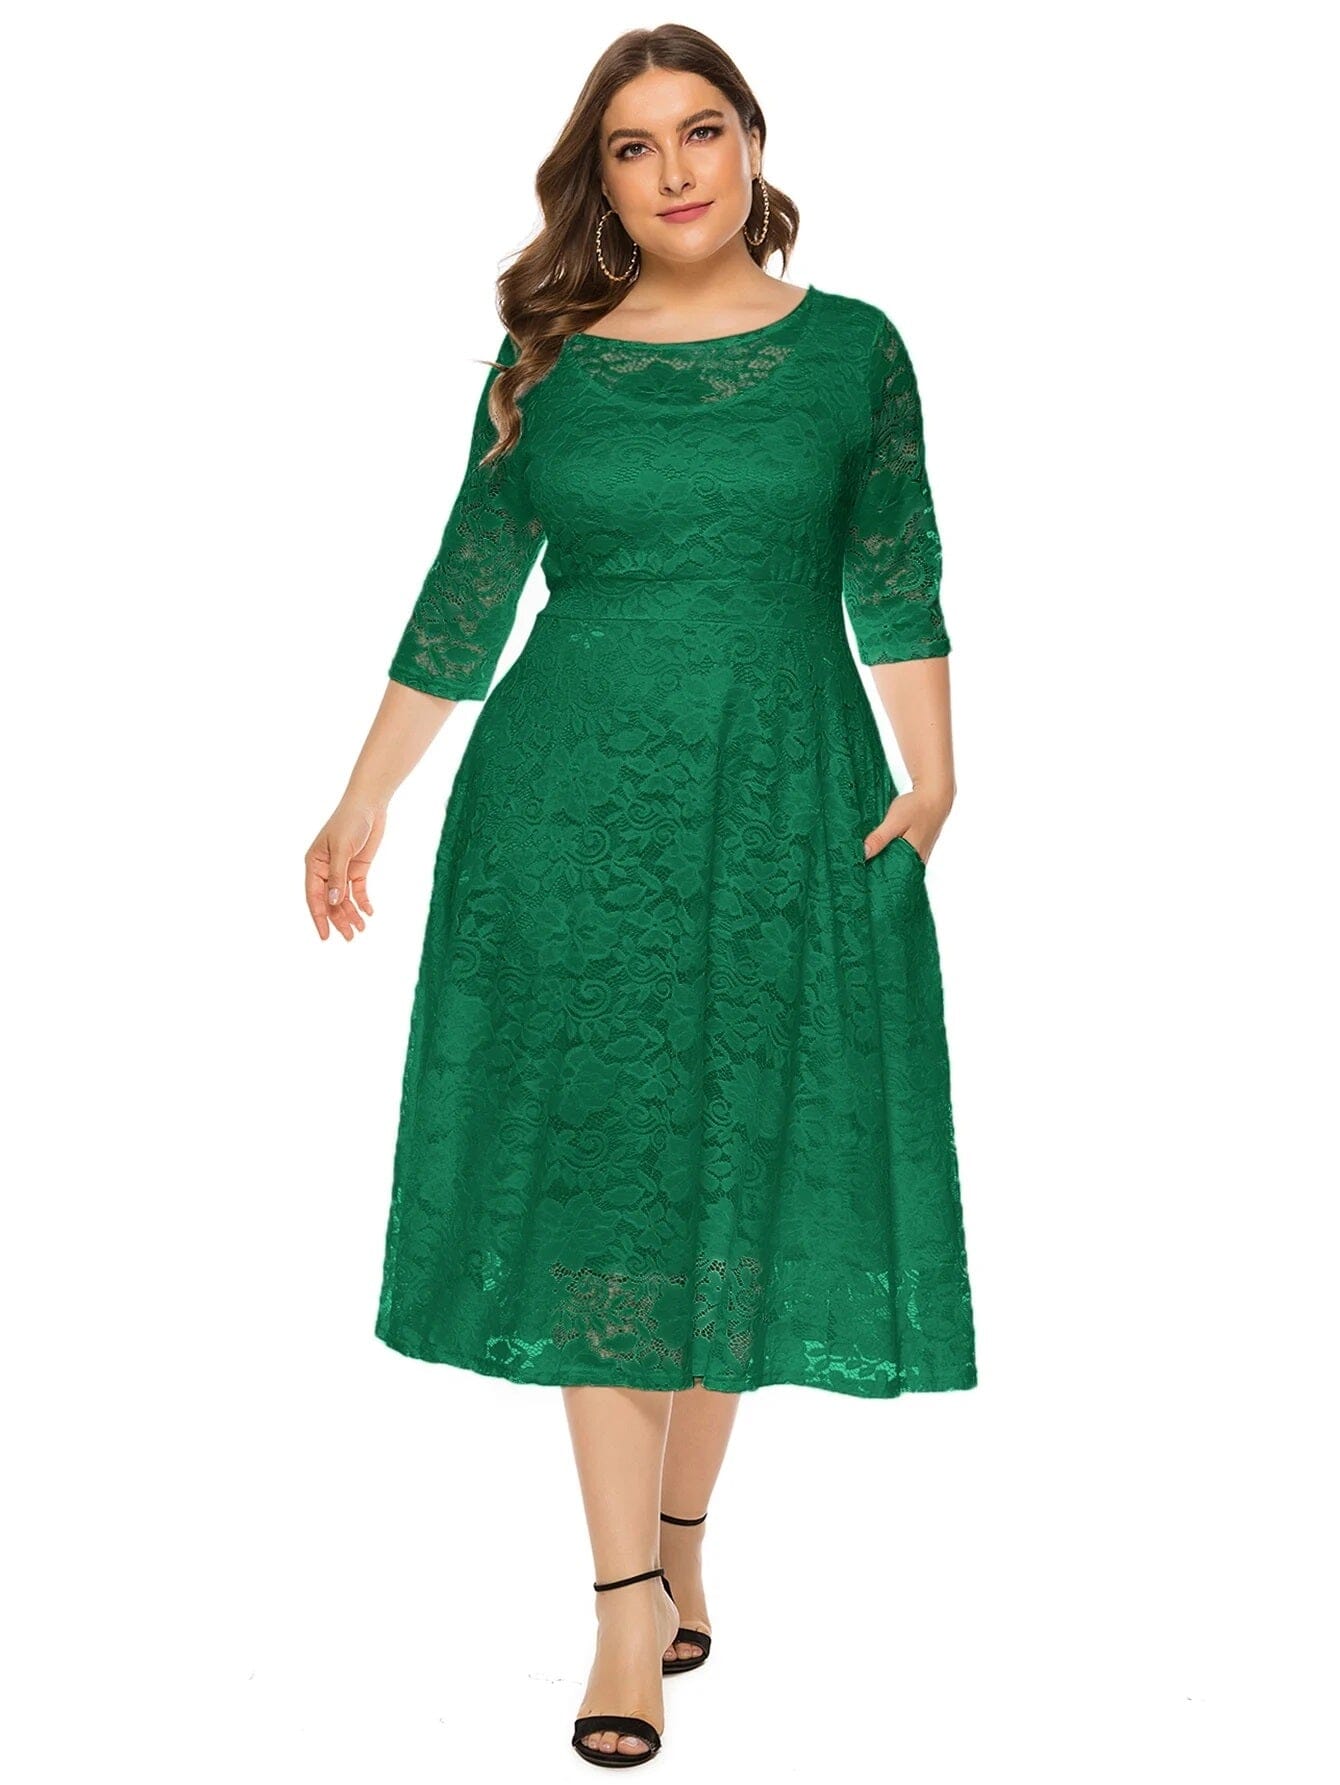 Women Plus Size Vintage Lace Swing Party Cocktail Wedding Midi Dress with pocket Dresses jehouze Green XL 